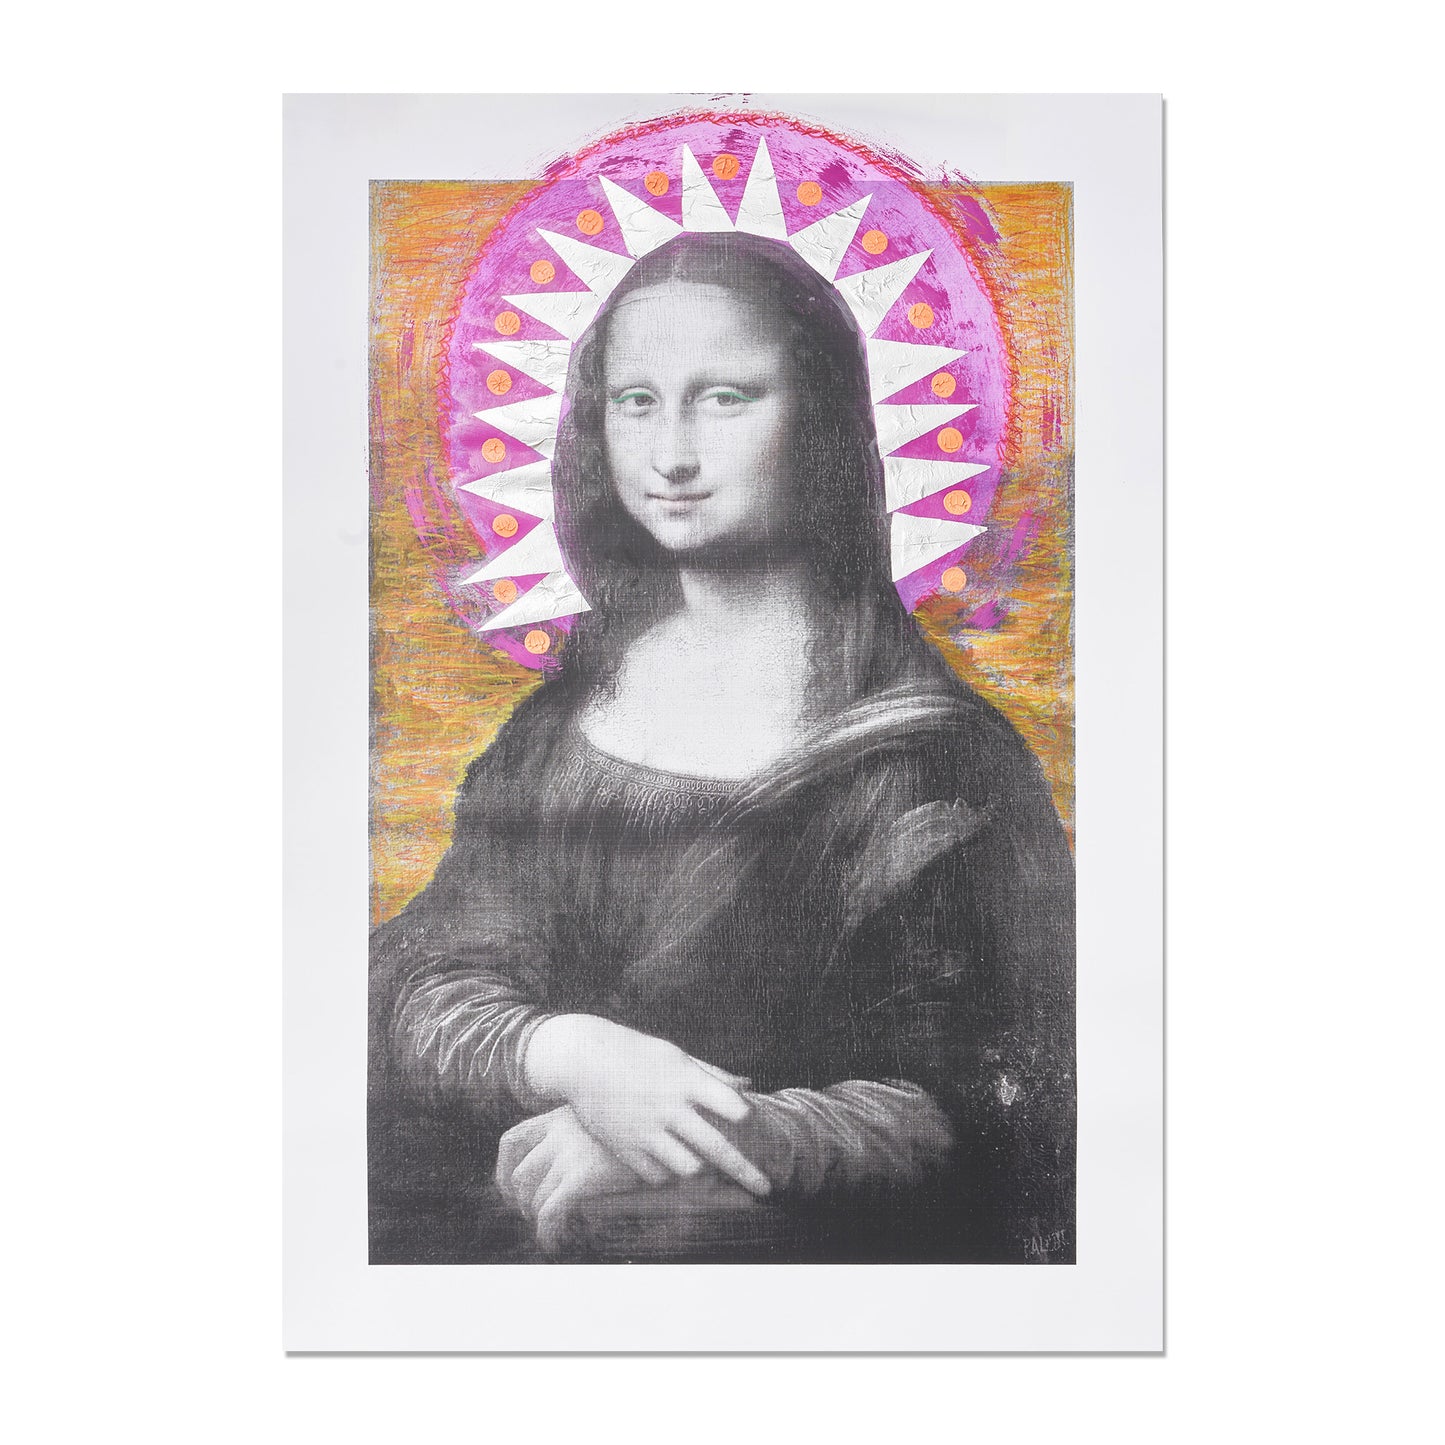 St Mona Lisa, Mixed Media Art